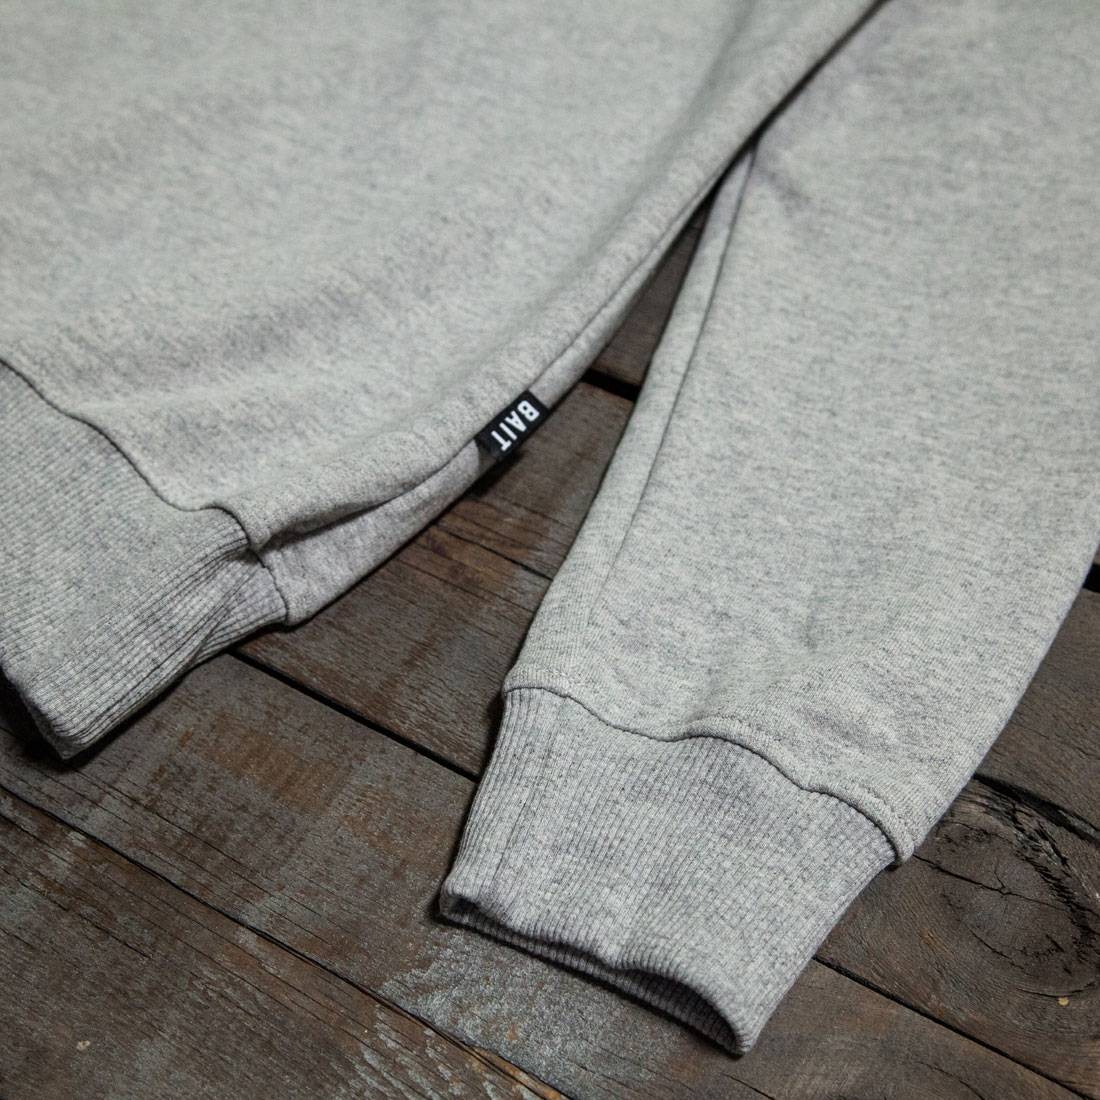 BAIT Men Premium Crew Neck Sweater - Made in Los Angeles gray heather